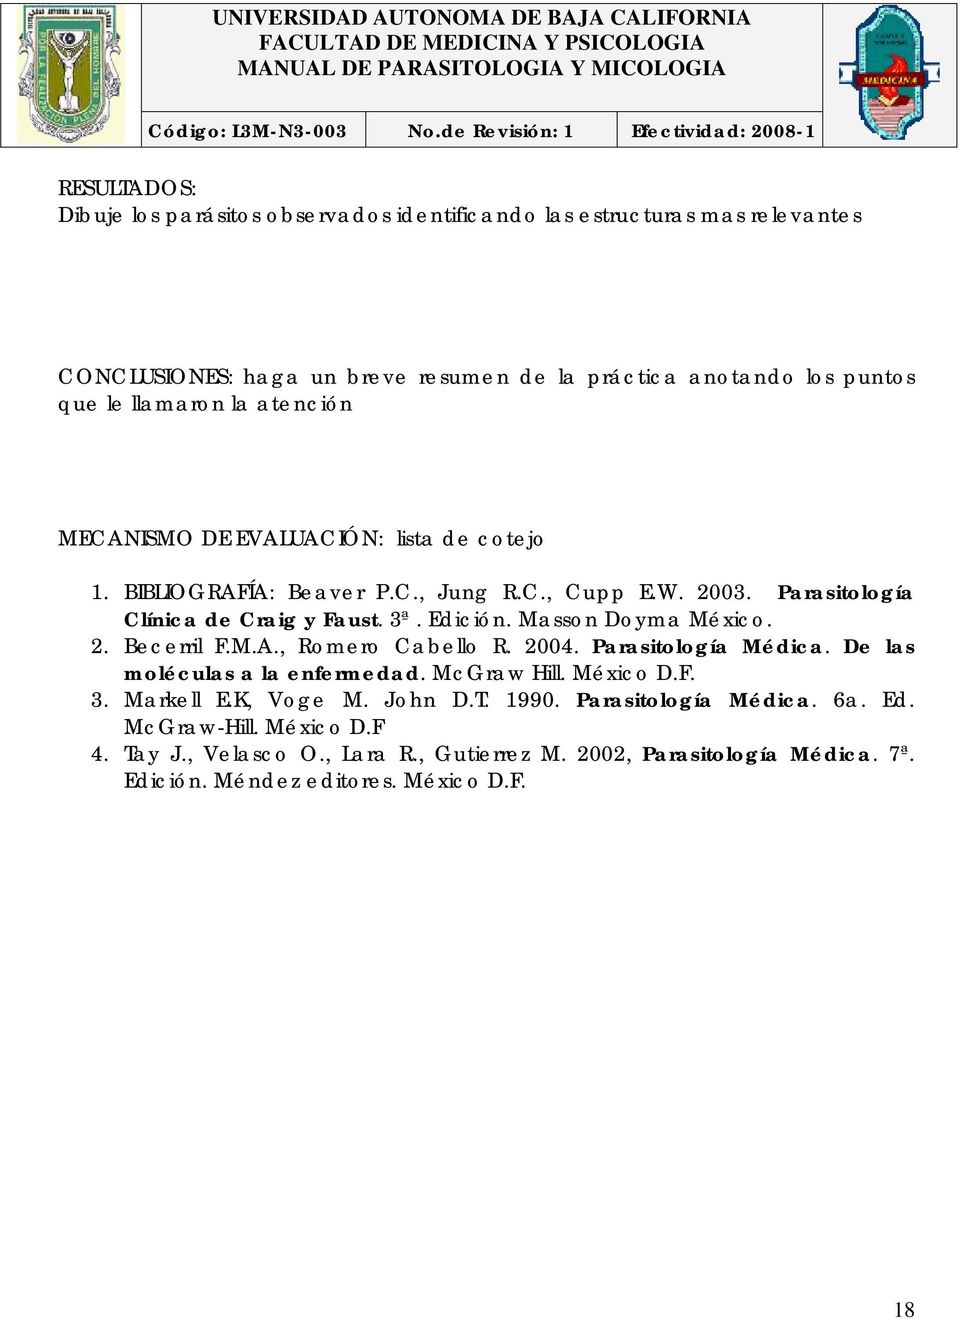 Masson Doyma México. 2. Becerril F.M.A., Romero Cabello R. 2004. Parasitología Médica. De las moléculas a la enfermedad. McGraw Hill. México D.F. 3. Markell E.K, Voge M.